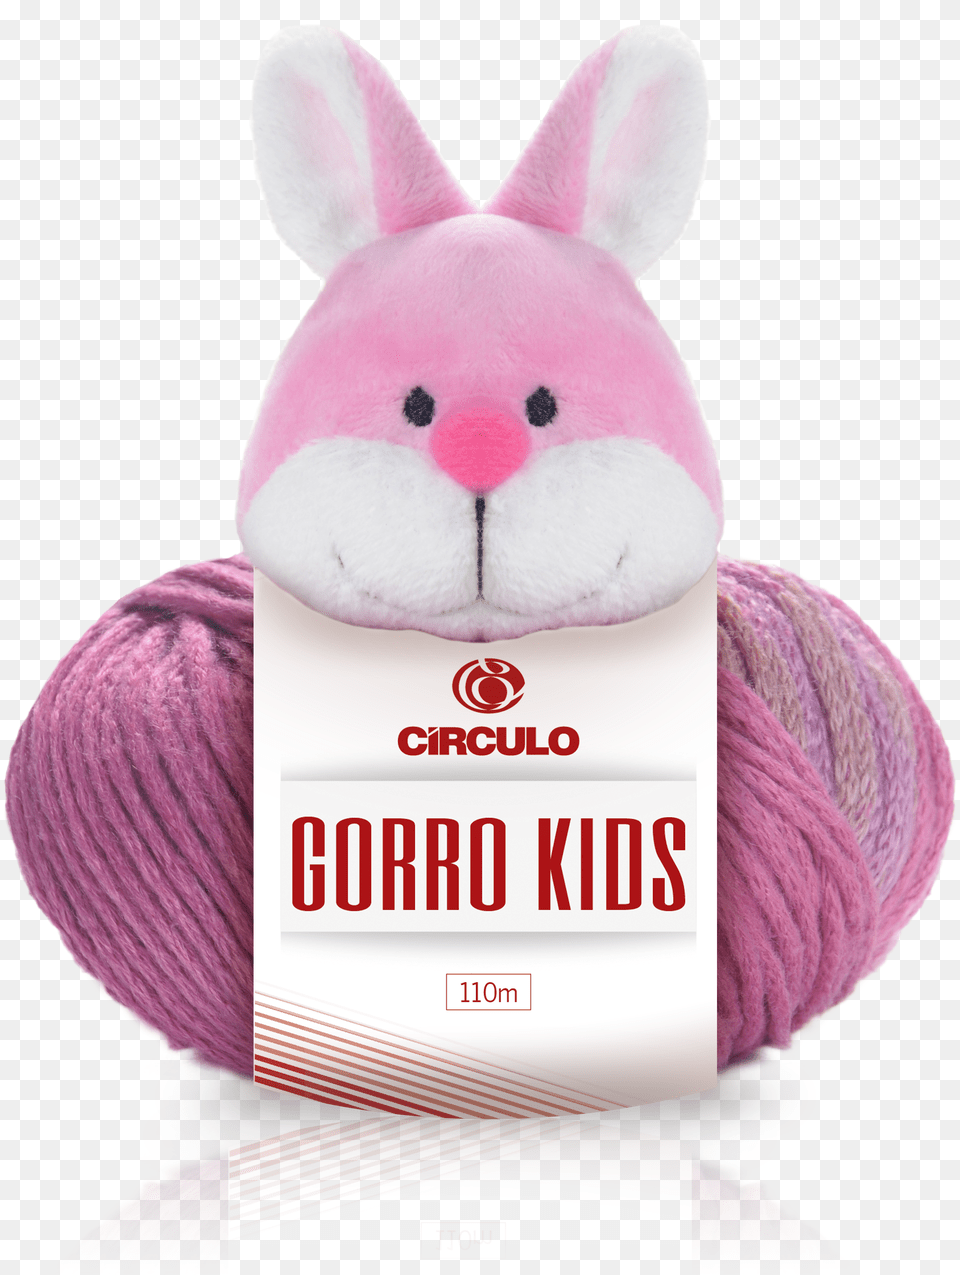 Gorro Kids Urso Copy Gorro Kids Coruja Copy Gorro Girafa Fio Gorro Kids 100g 8606 Papai Noel Free Transparent Png